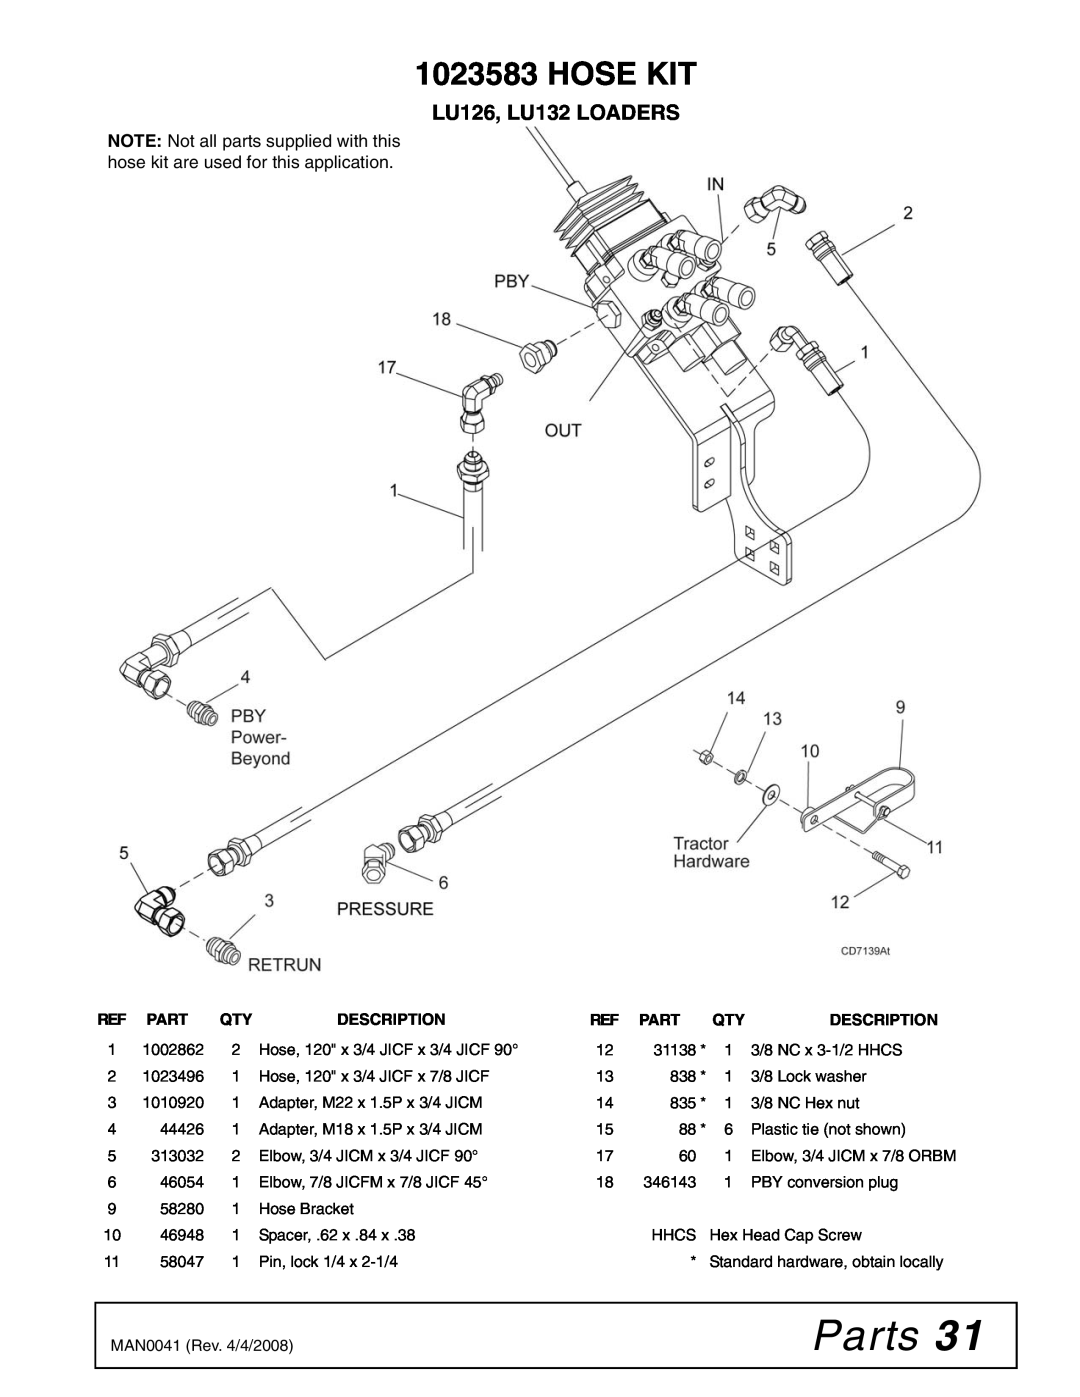 Woods Equipment installation manual Parts, Hose Kit, LU126, LU132 LOADERS, Description 